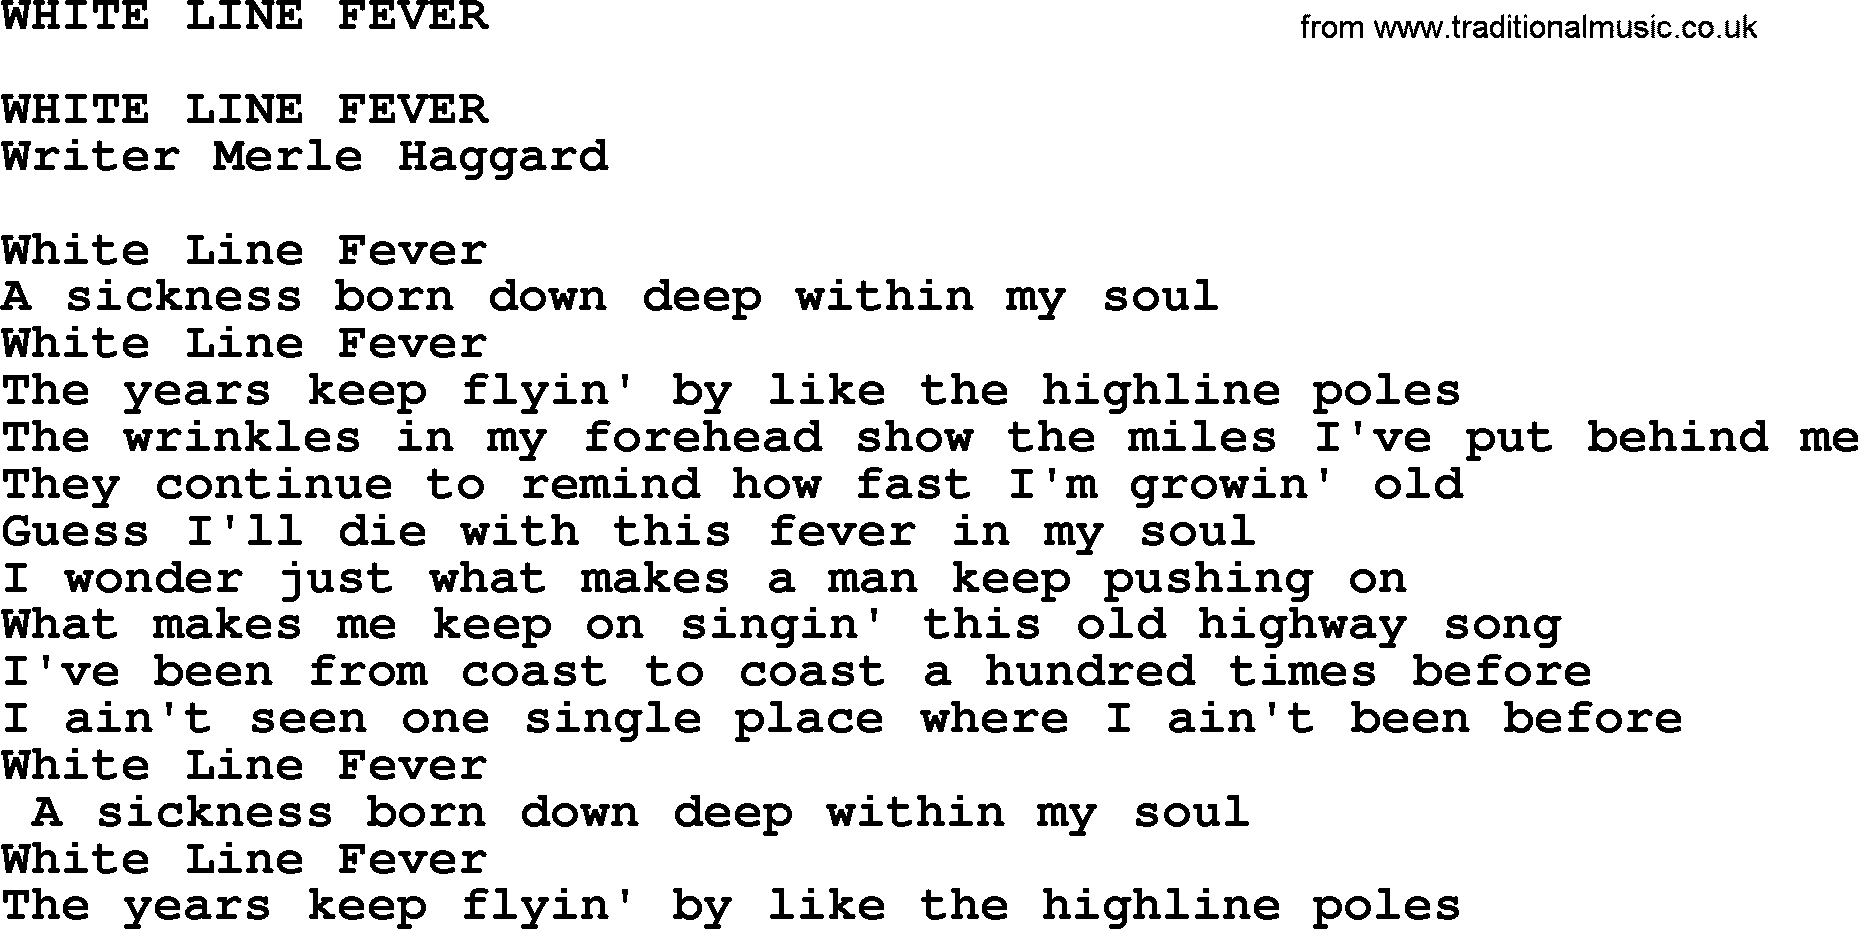 Merle Haggard song: White Line Fever, lyrics.